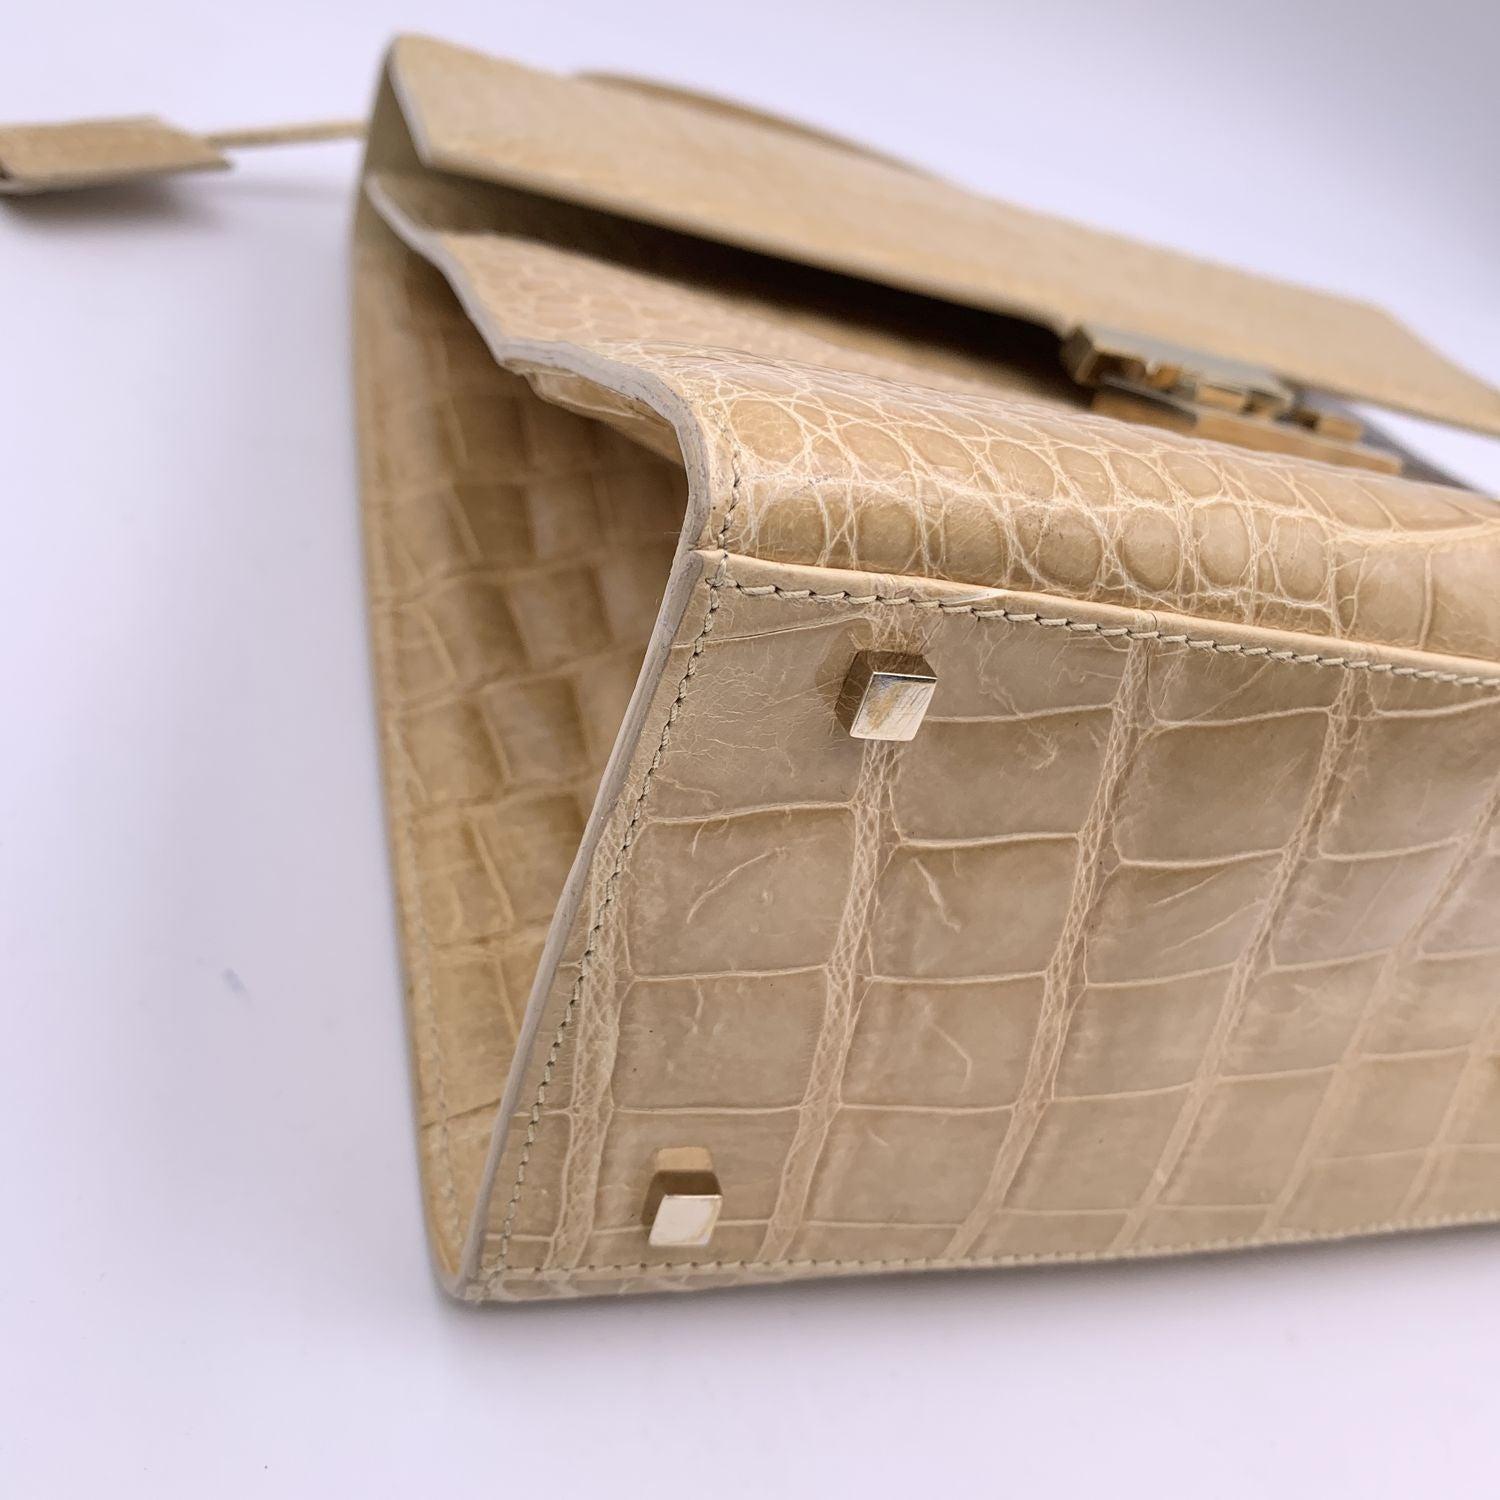 Gucci Beige Patent Leather Satchel Top Handle Bag 2